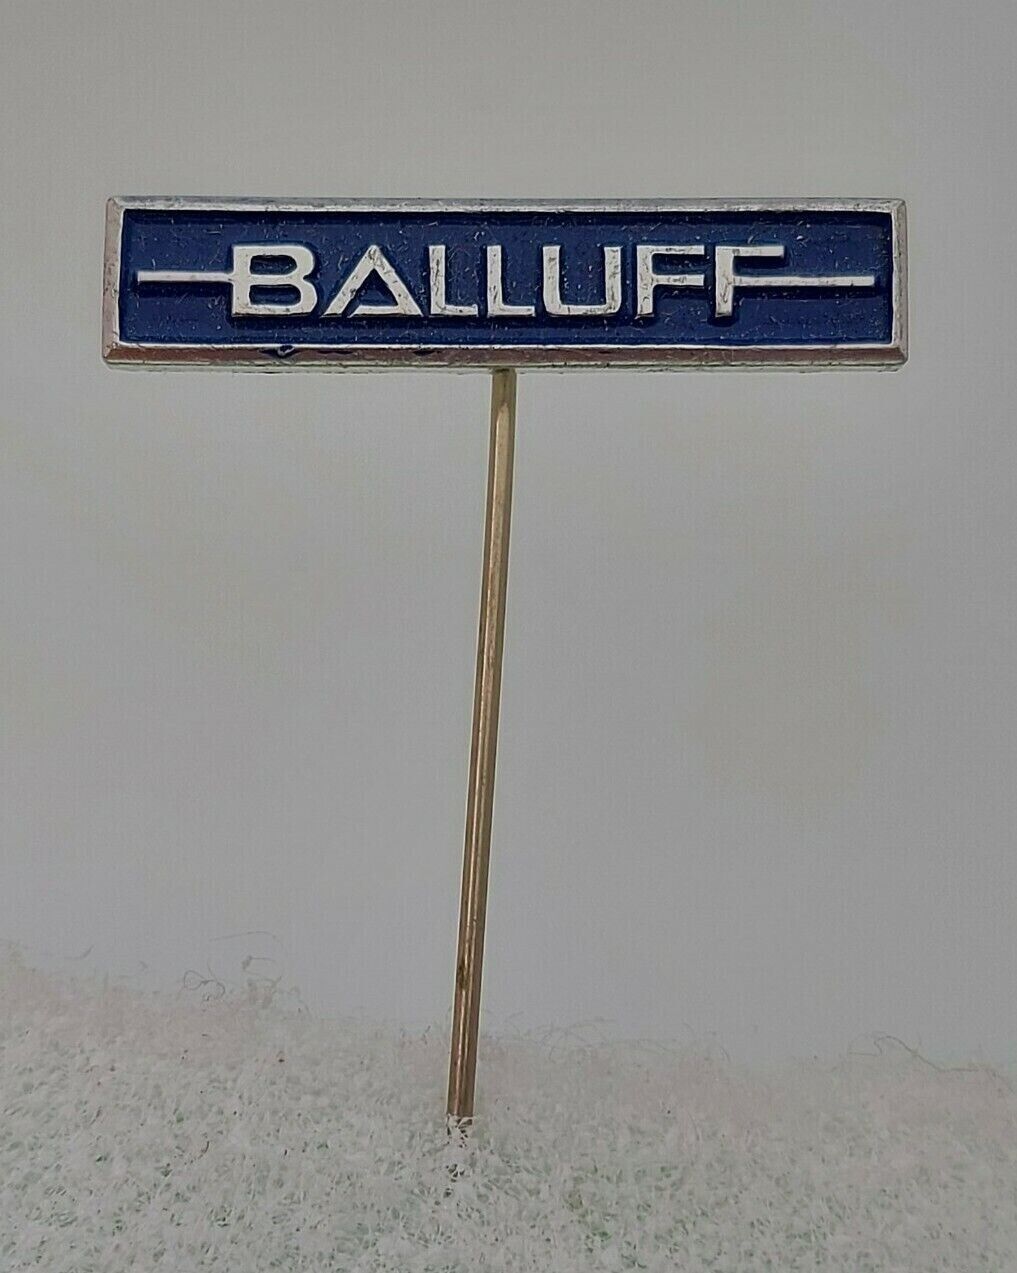 BALLUFF GmbH sensors manufacturers - Germany, vintage pin badge 